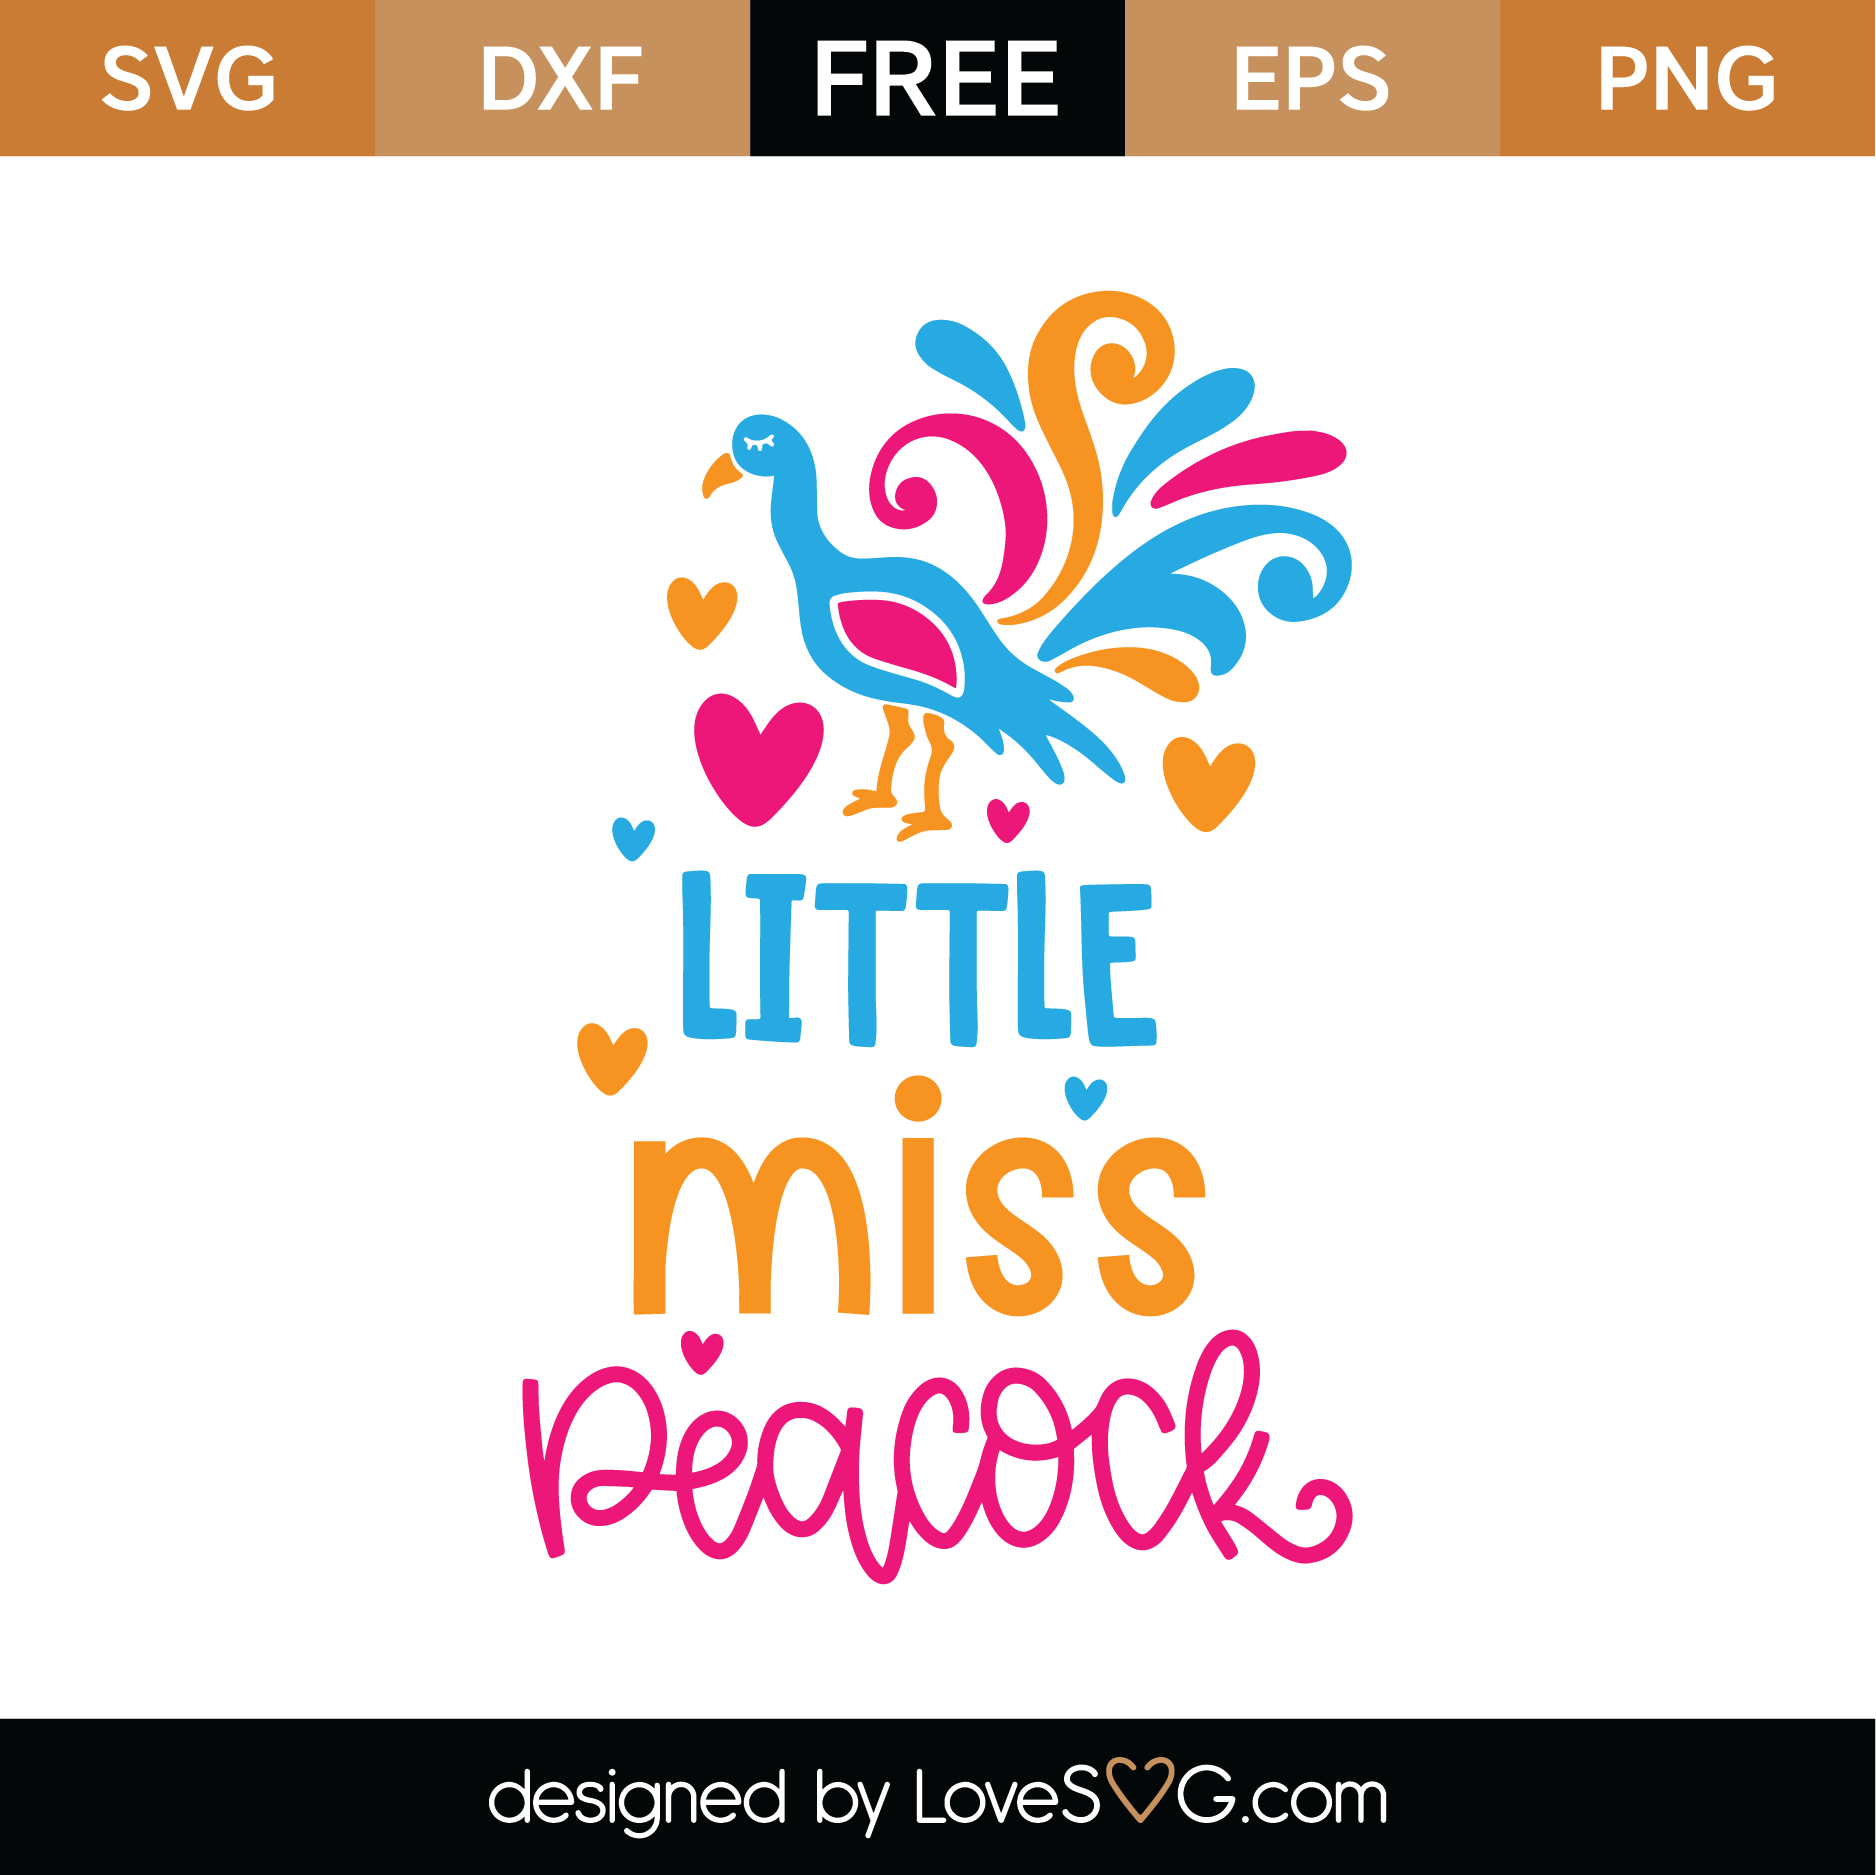 Download Free Little Miss Peacock SVG Cut File | Lovesvg.com